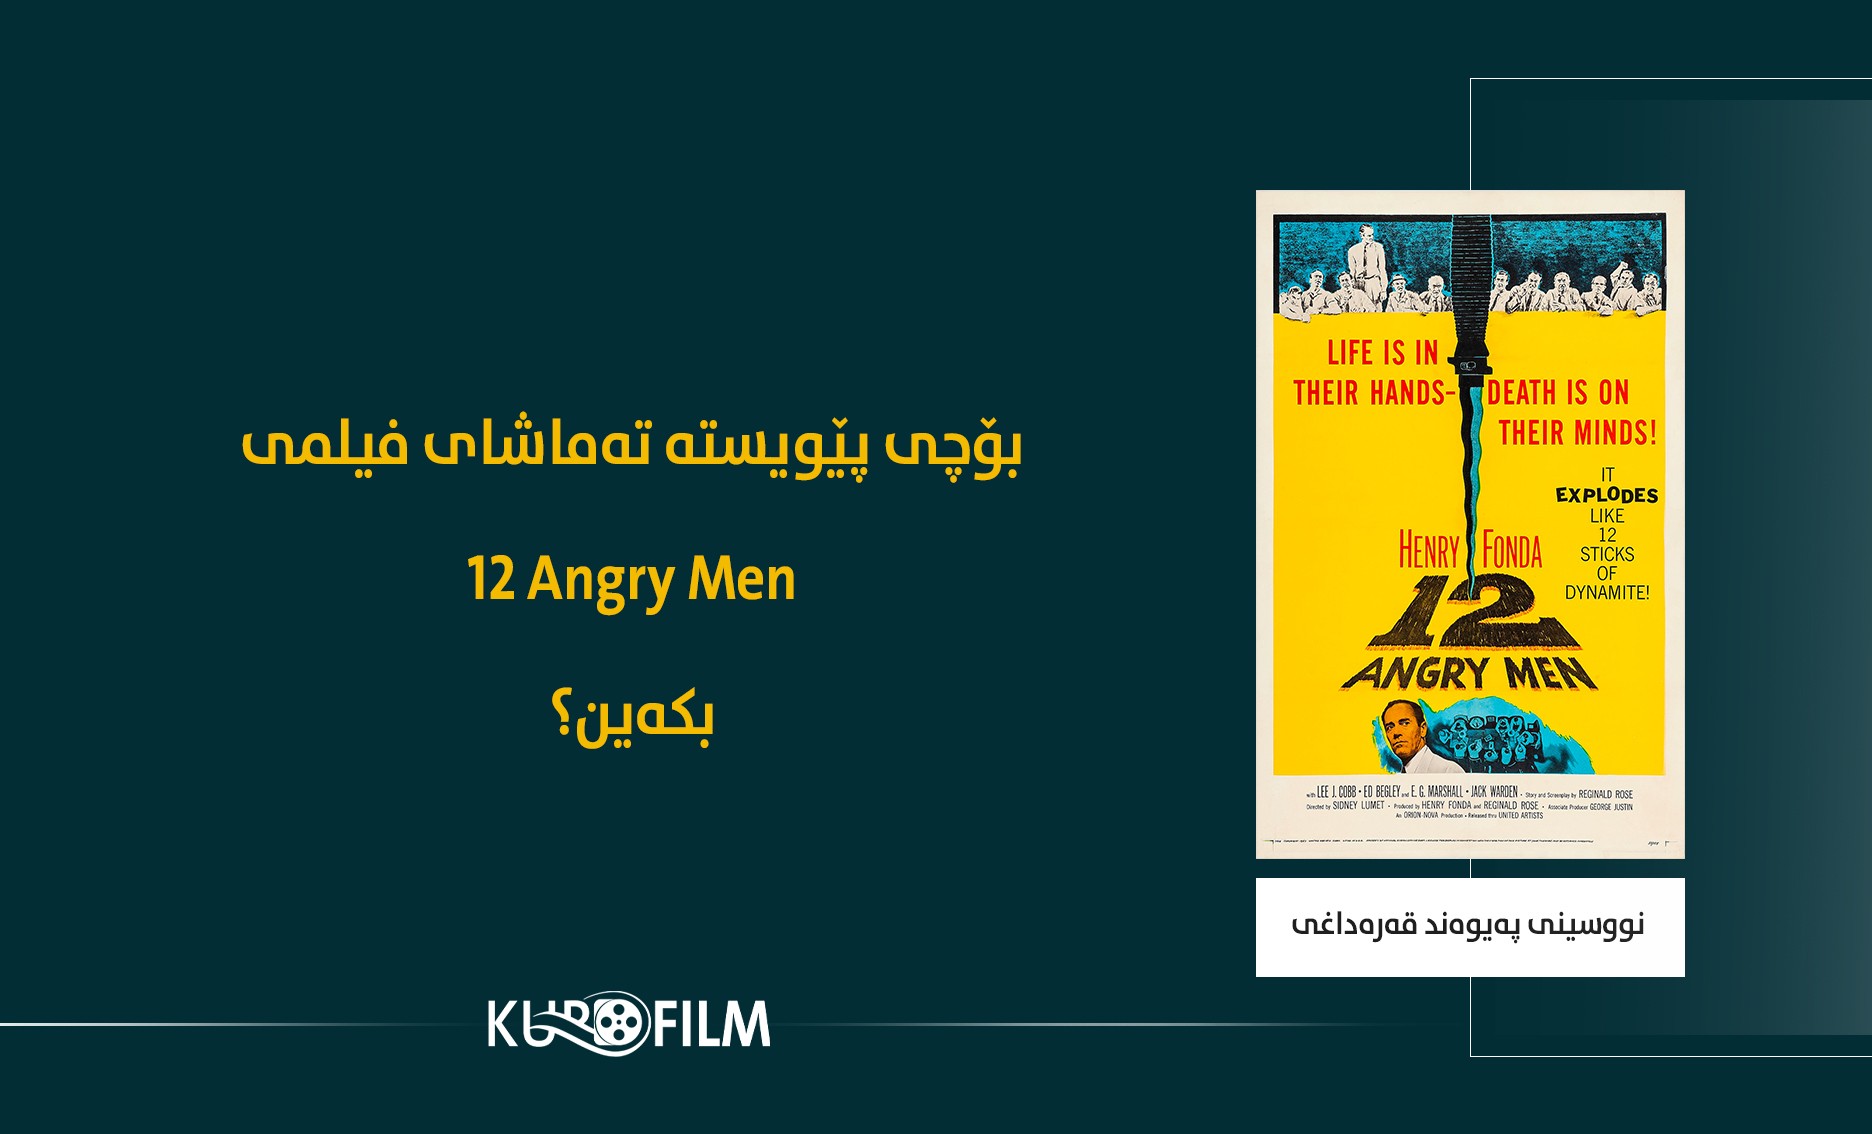 بۆچی پێویستە تەماشای فیلمی (12 Angry Men) بکەین؟